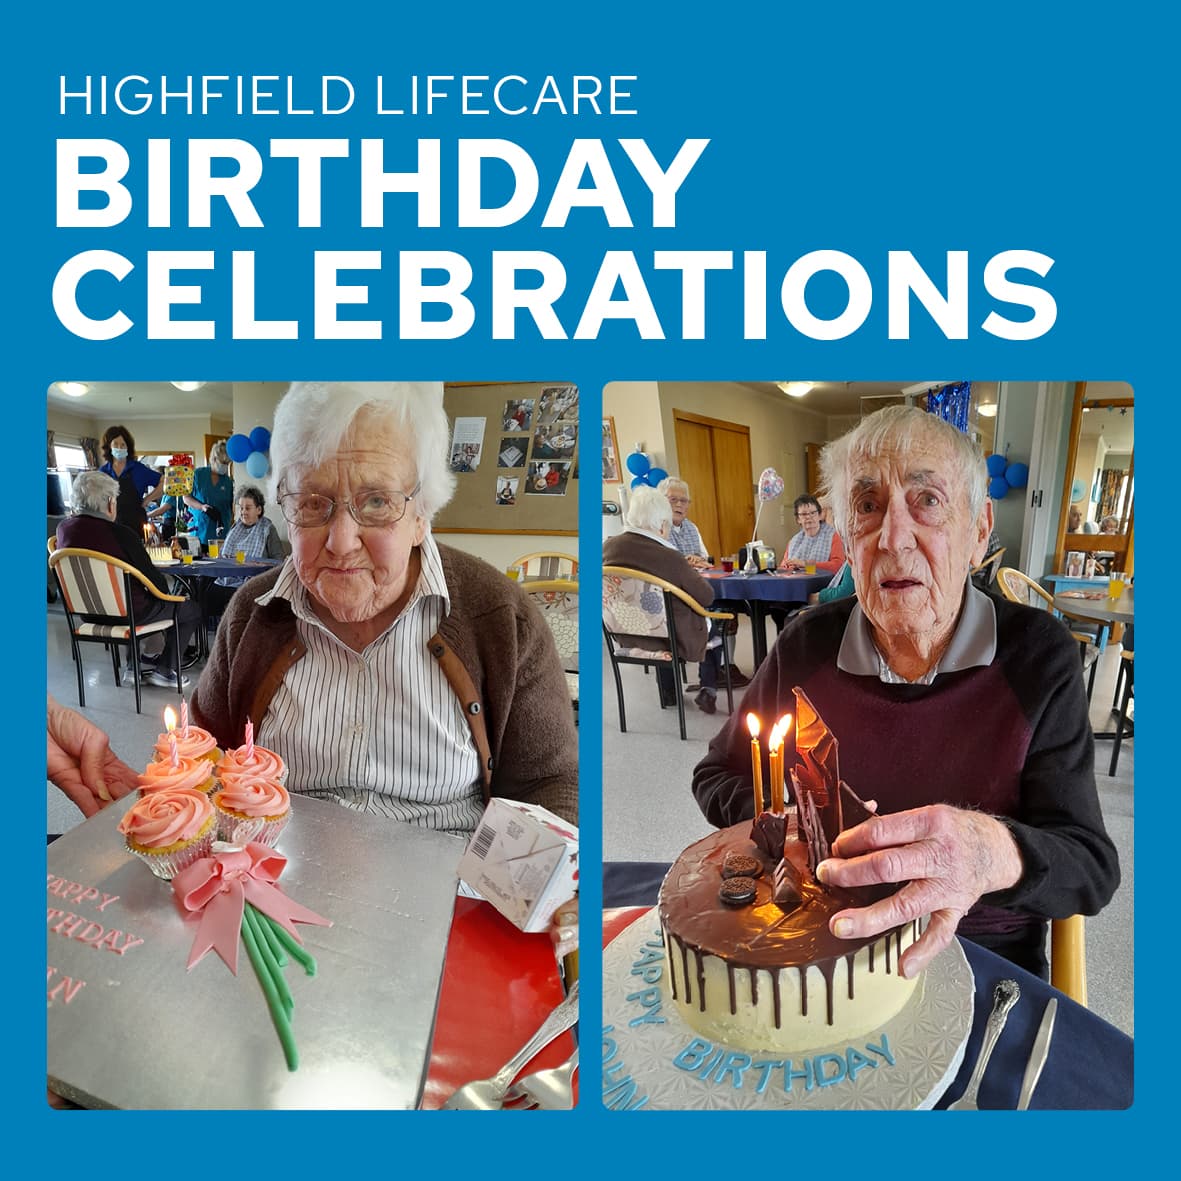 ​Spectacular cakes at Highfield Lifecare!